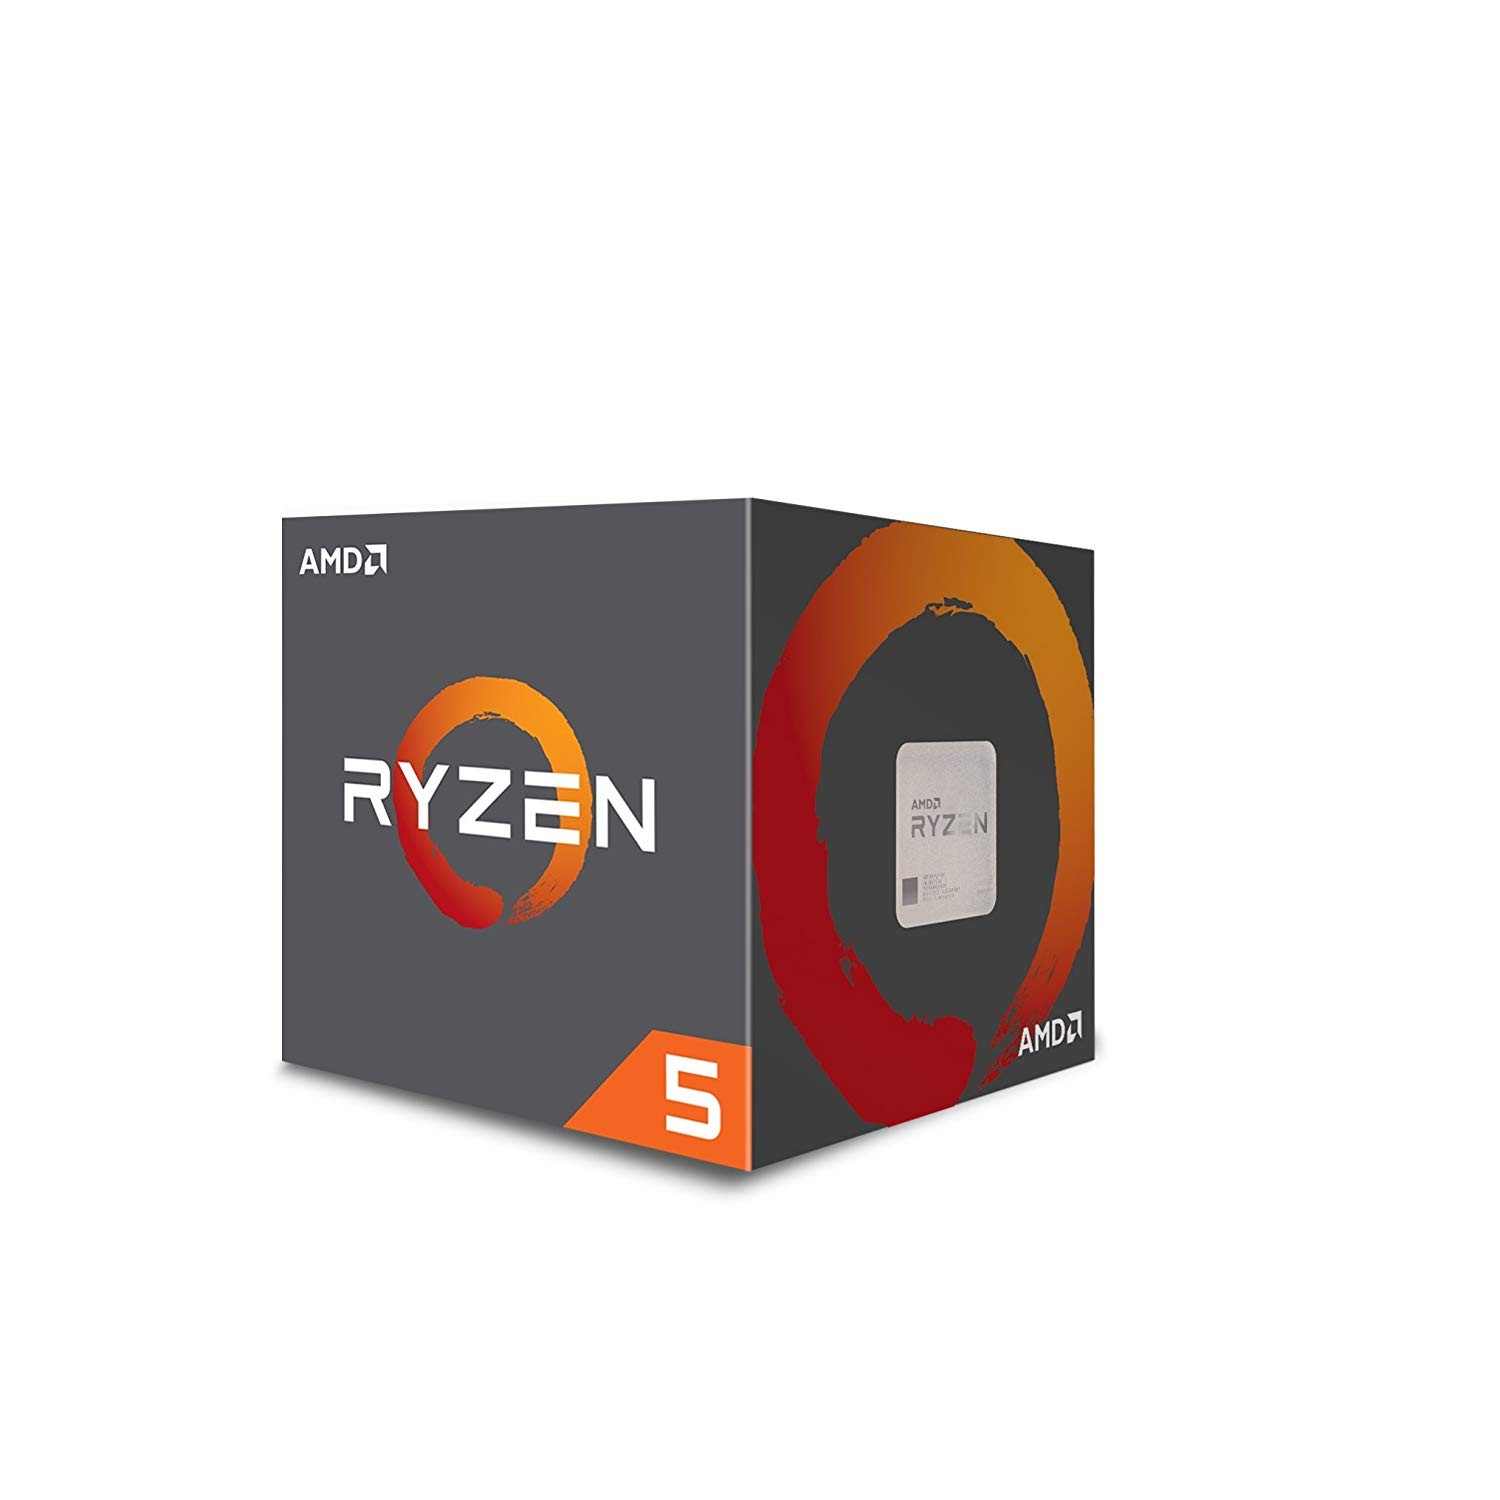 پردازنده AMD Ryzen 5 2600X